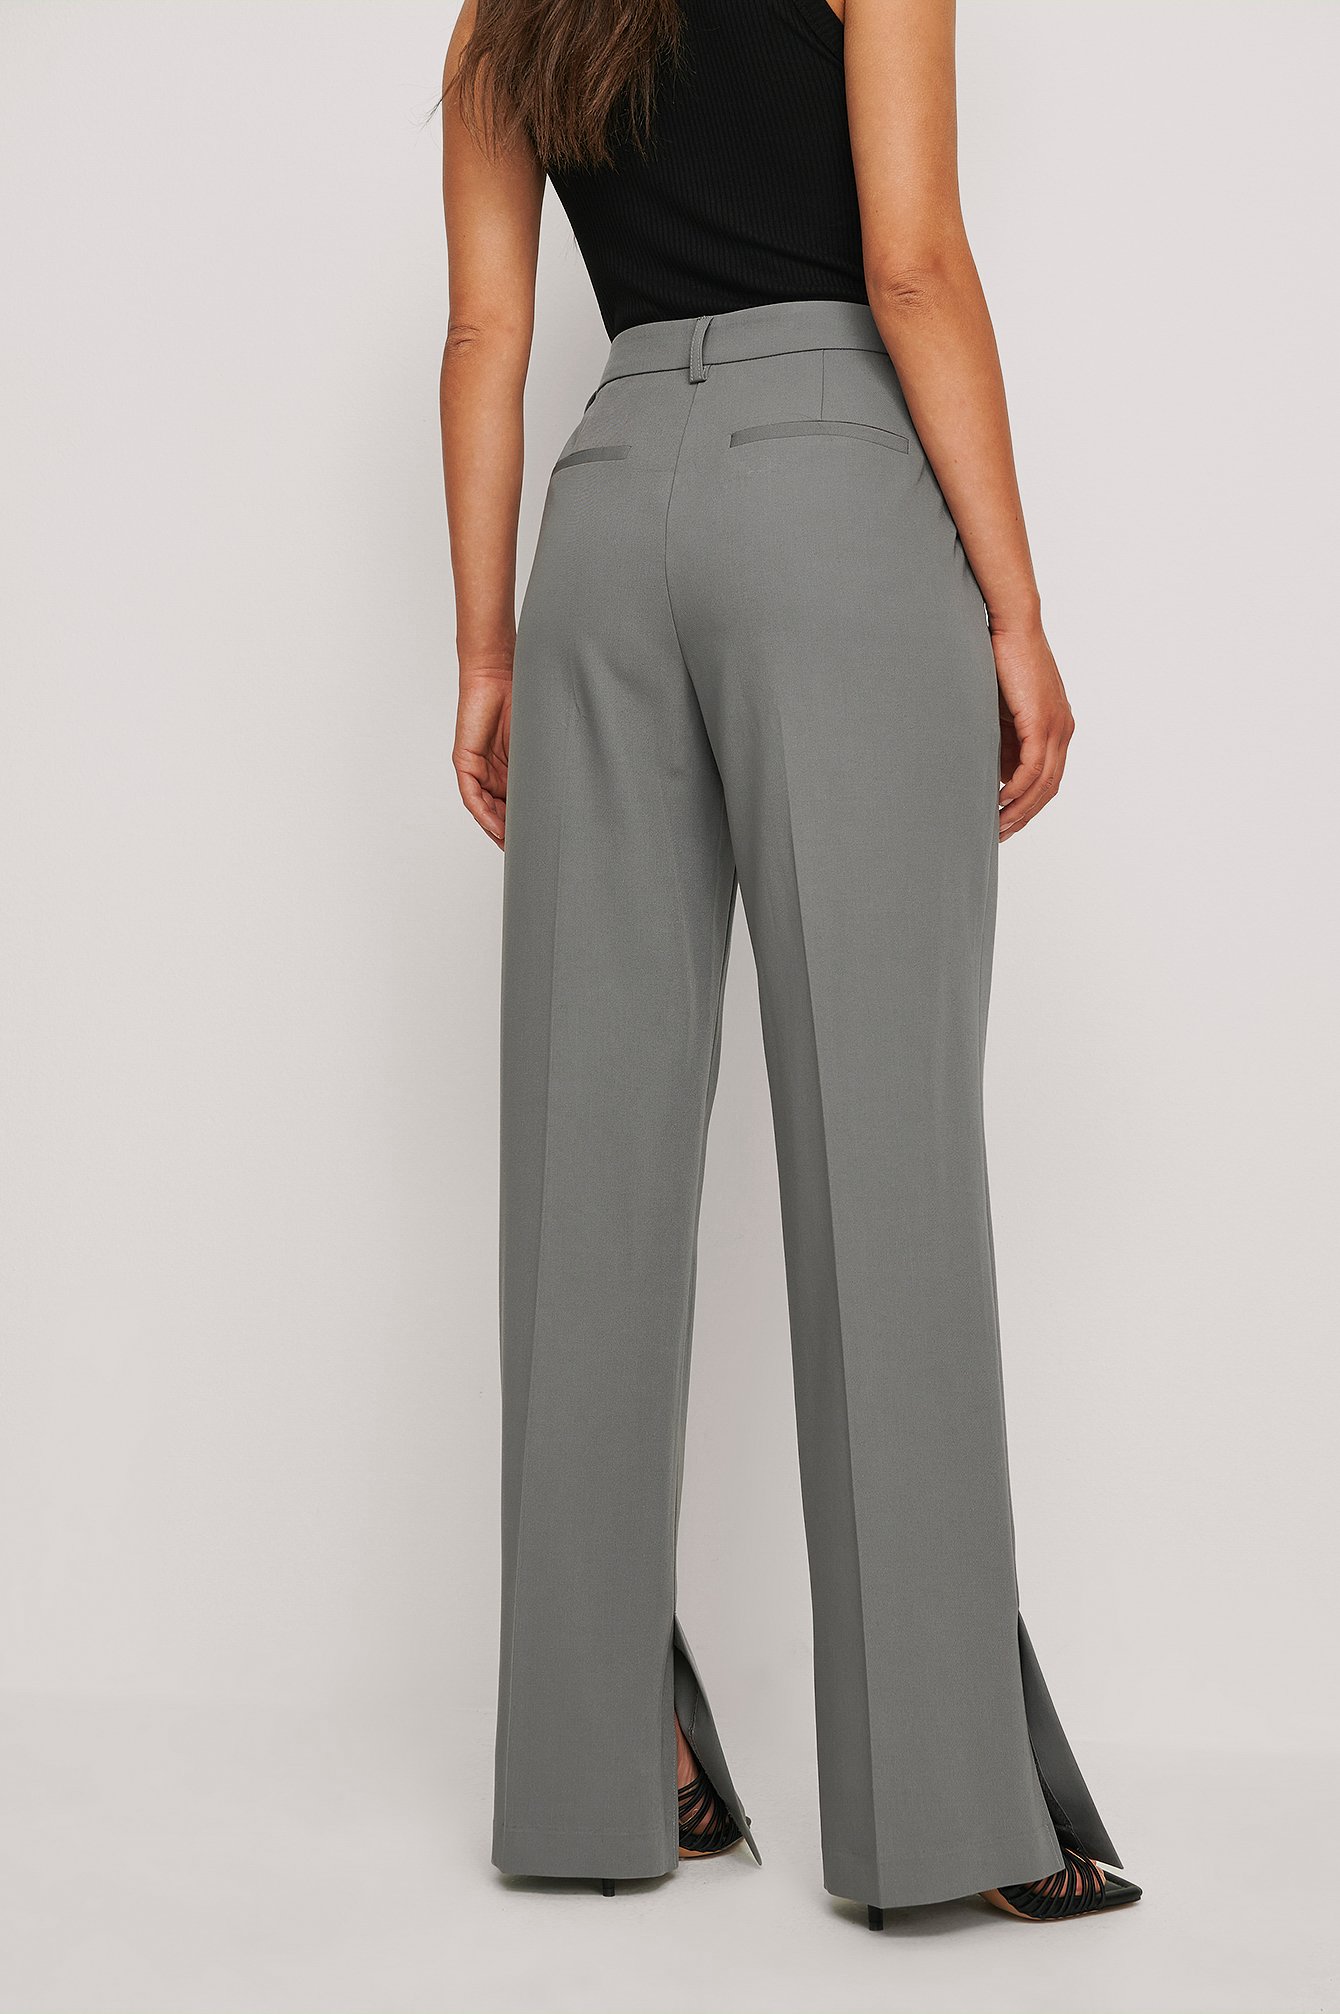 discount 50% Gray 38                  EU Primark slacks WOMEN FASHION Trousers Slacks Shorts 